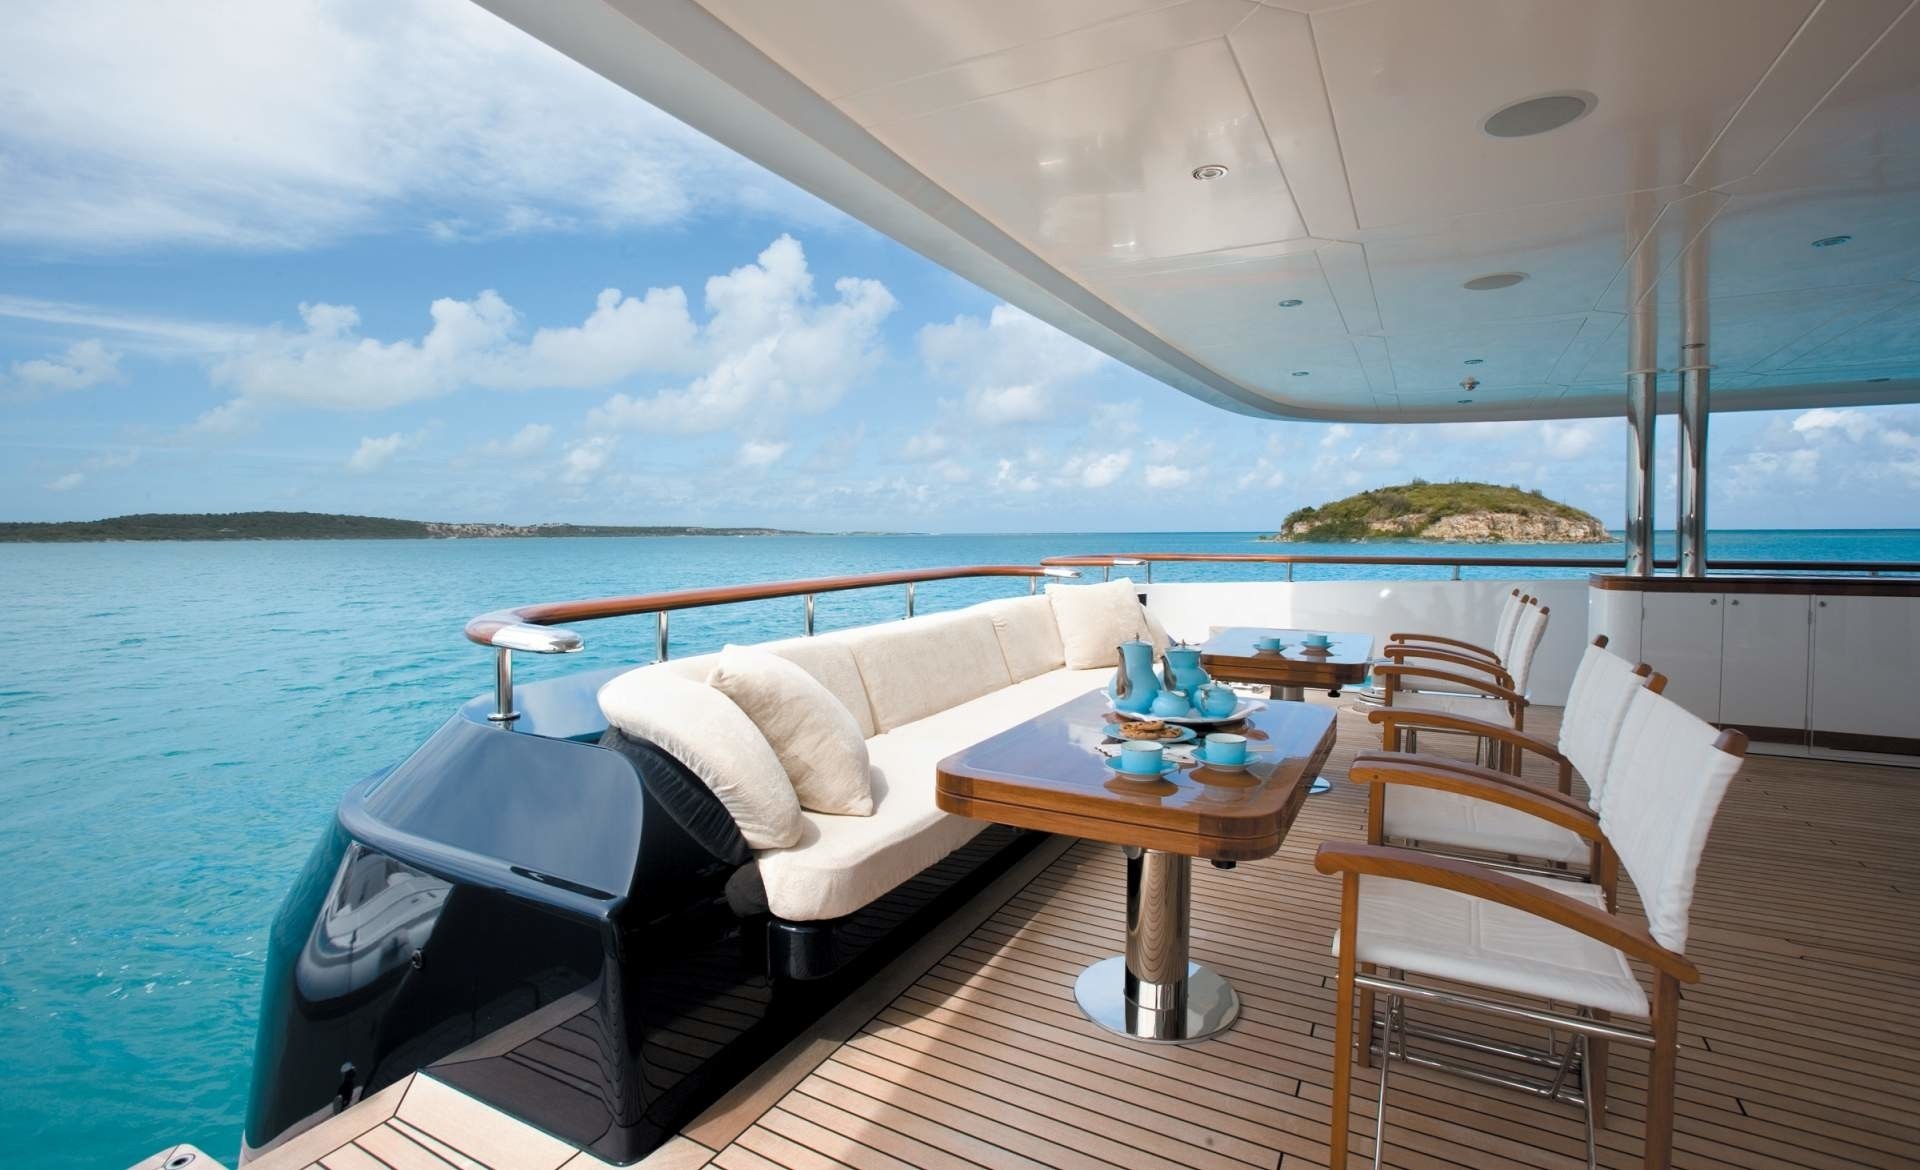 Sun Deck Image Gallery - Drinks Bar: Yacht WILD THYME's Sun Deck Image...